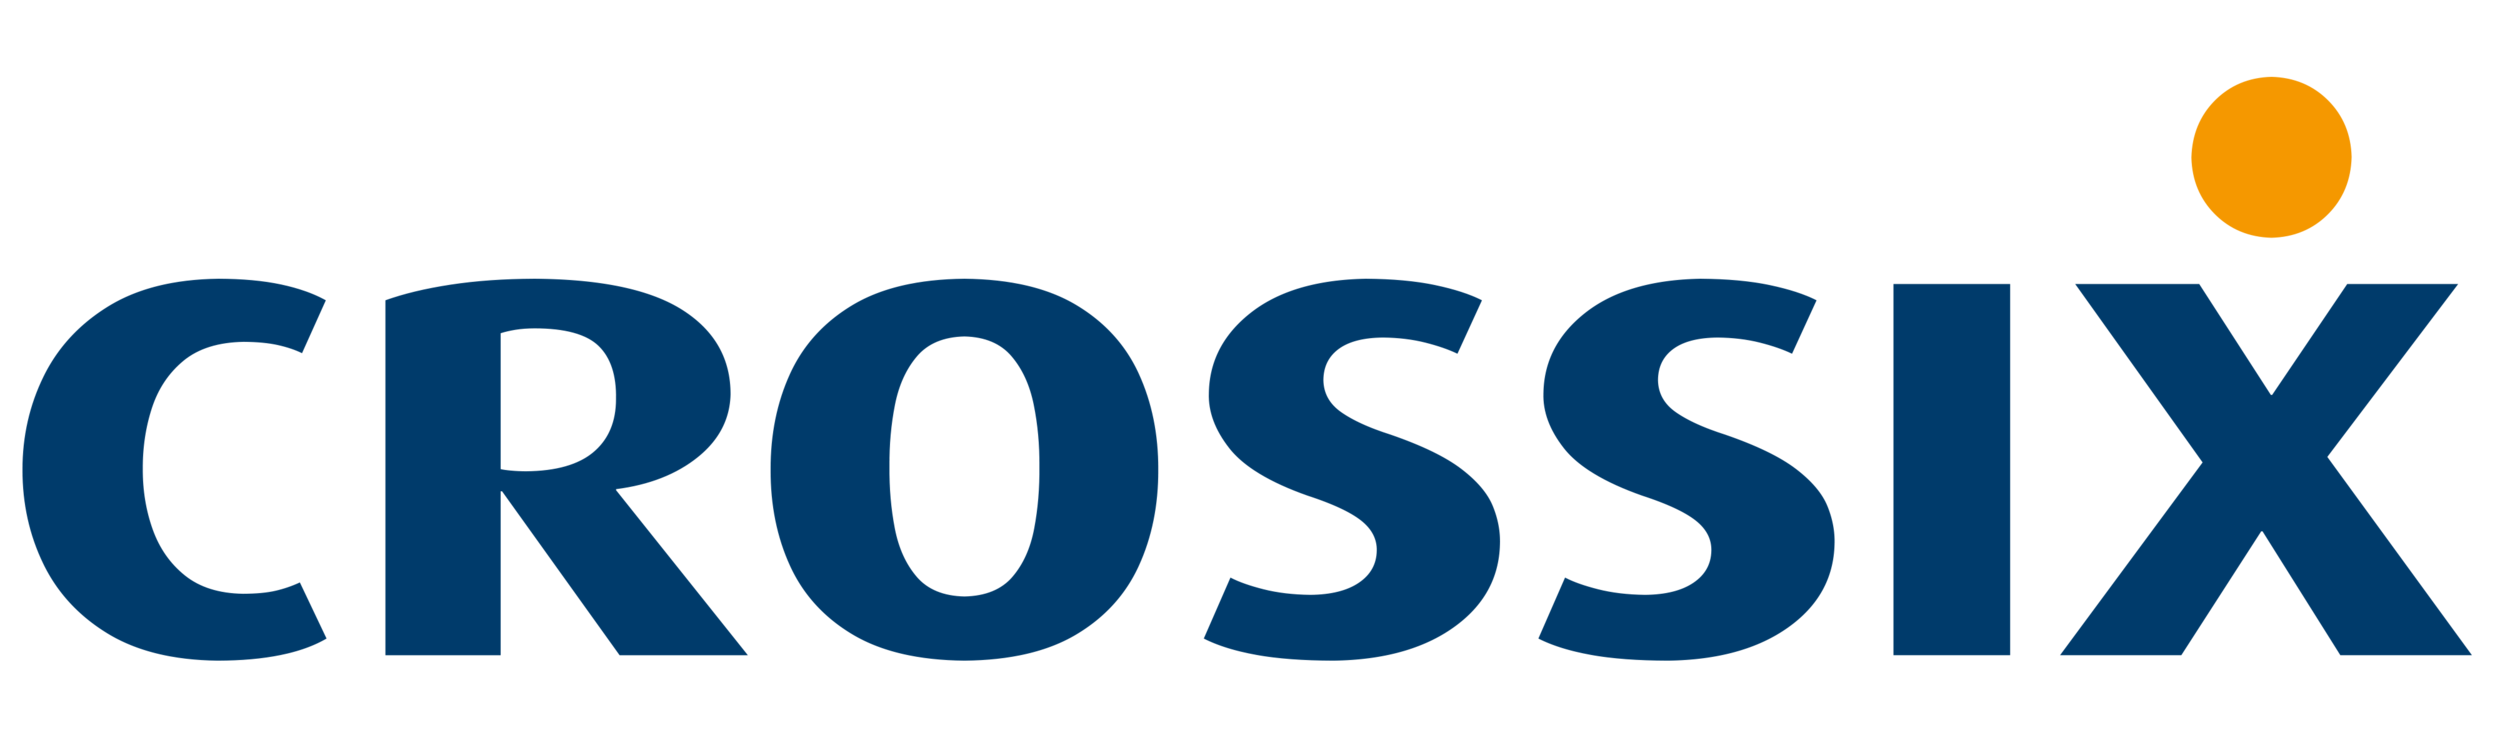 Crossix-Logo.png